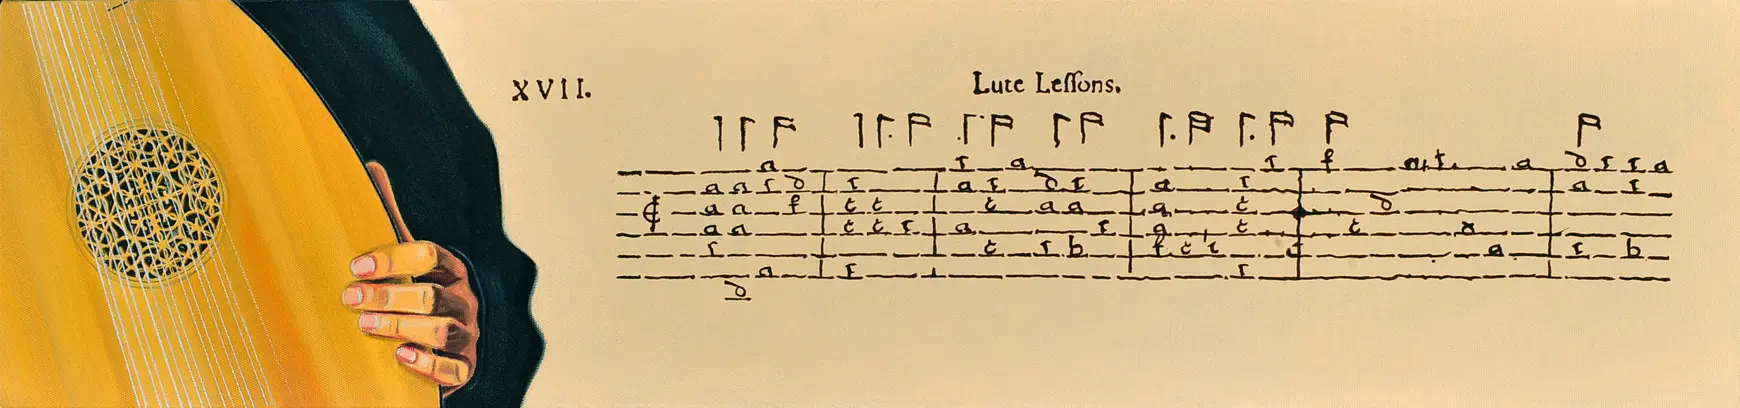 Lute Lessons 26 x 110 cm, Öl auf Leinwand (2005)